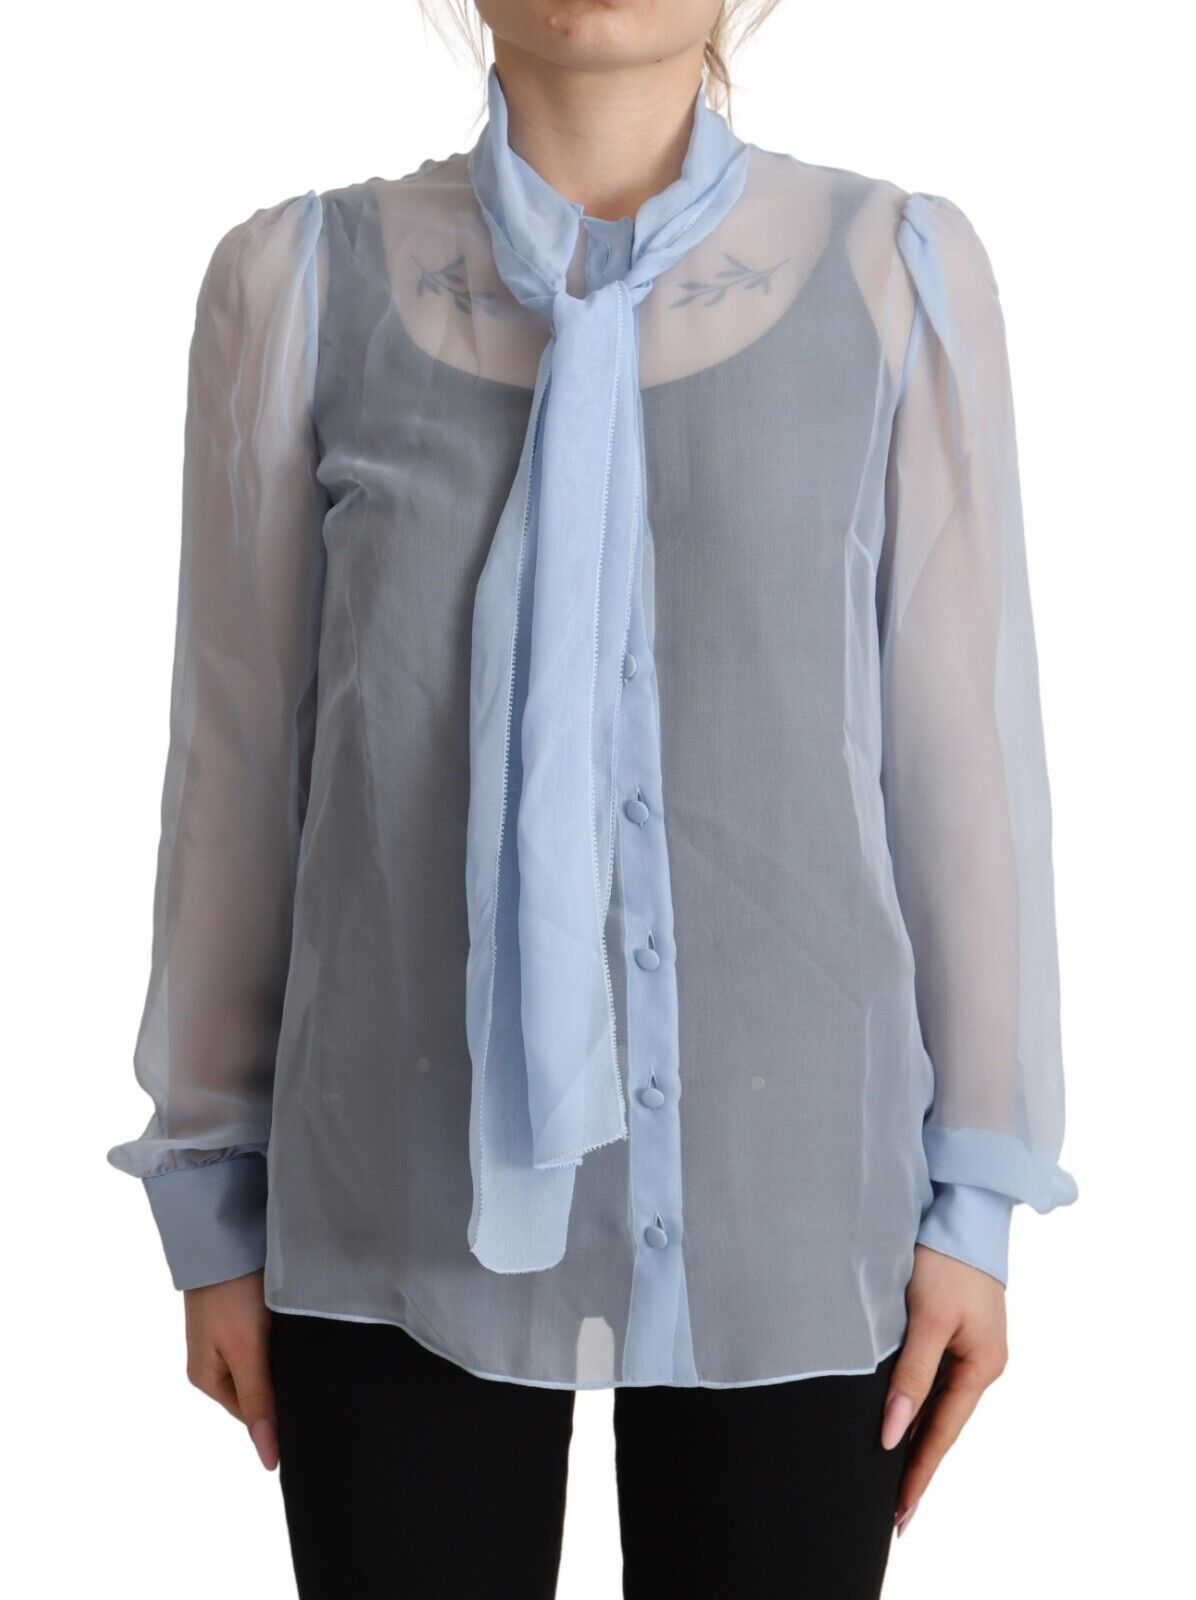 DOLCE & GABBANA Dolce & Gabbana  Silk Ascot Collar Long Sleeves Blouse Women's Top